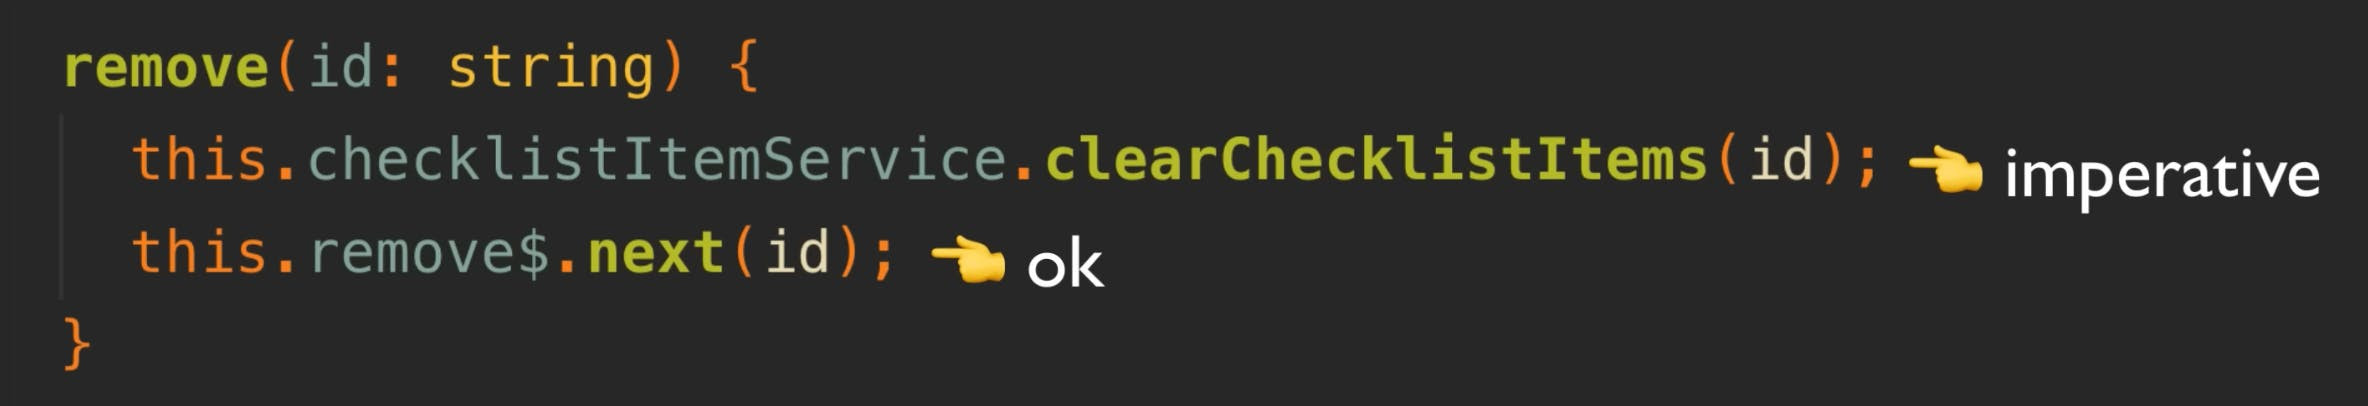 callback function for when someone clicks to delete a checklist